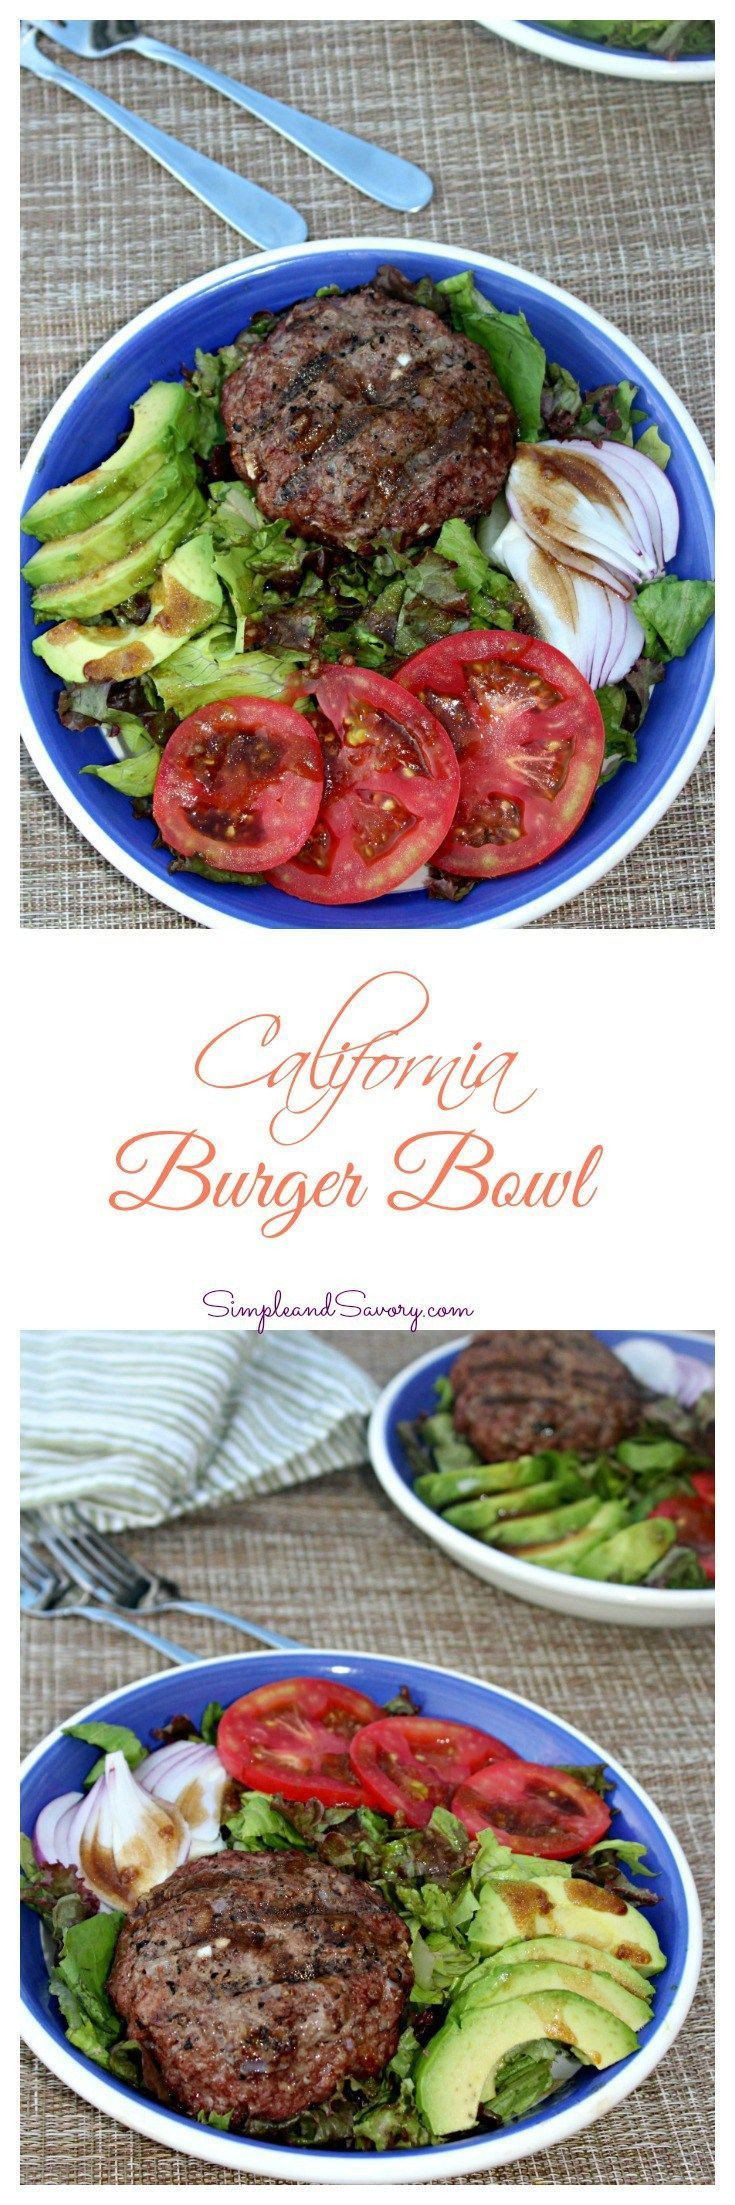 Low Calorie Hamburger Recipes
 Best 25 Low carb hamburger recipes ideas on Pinterest